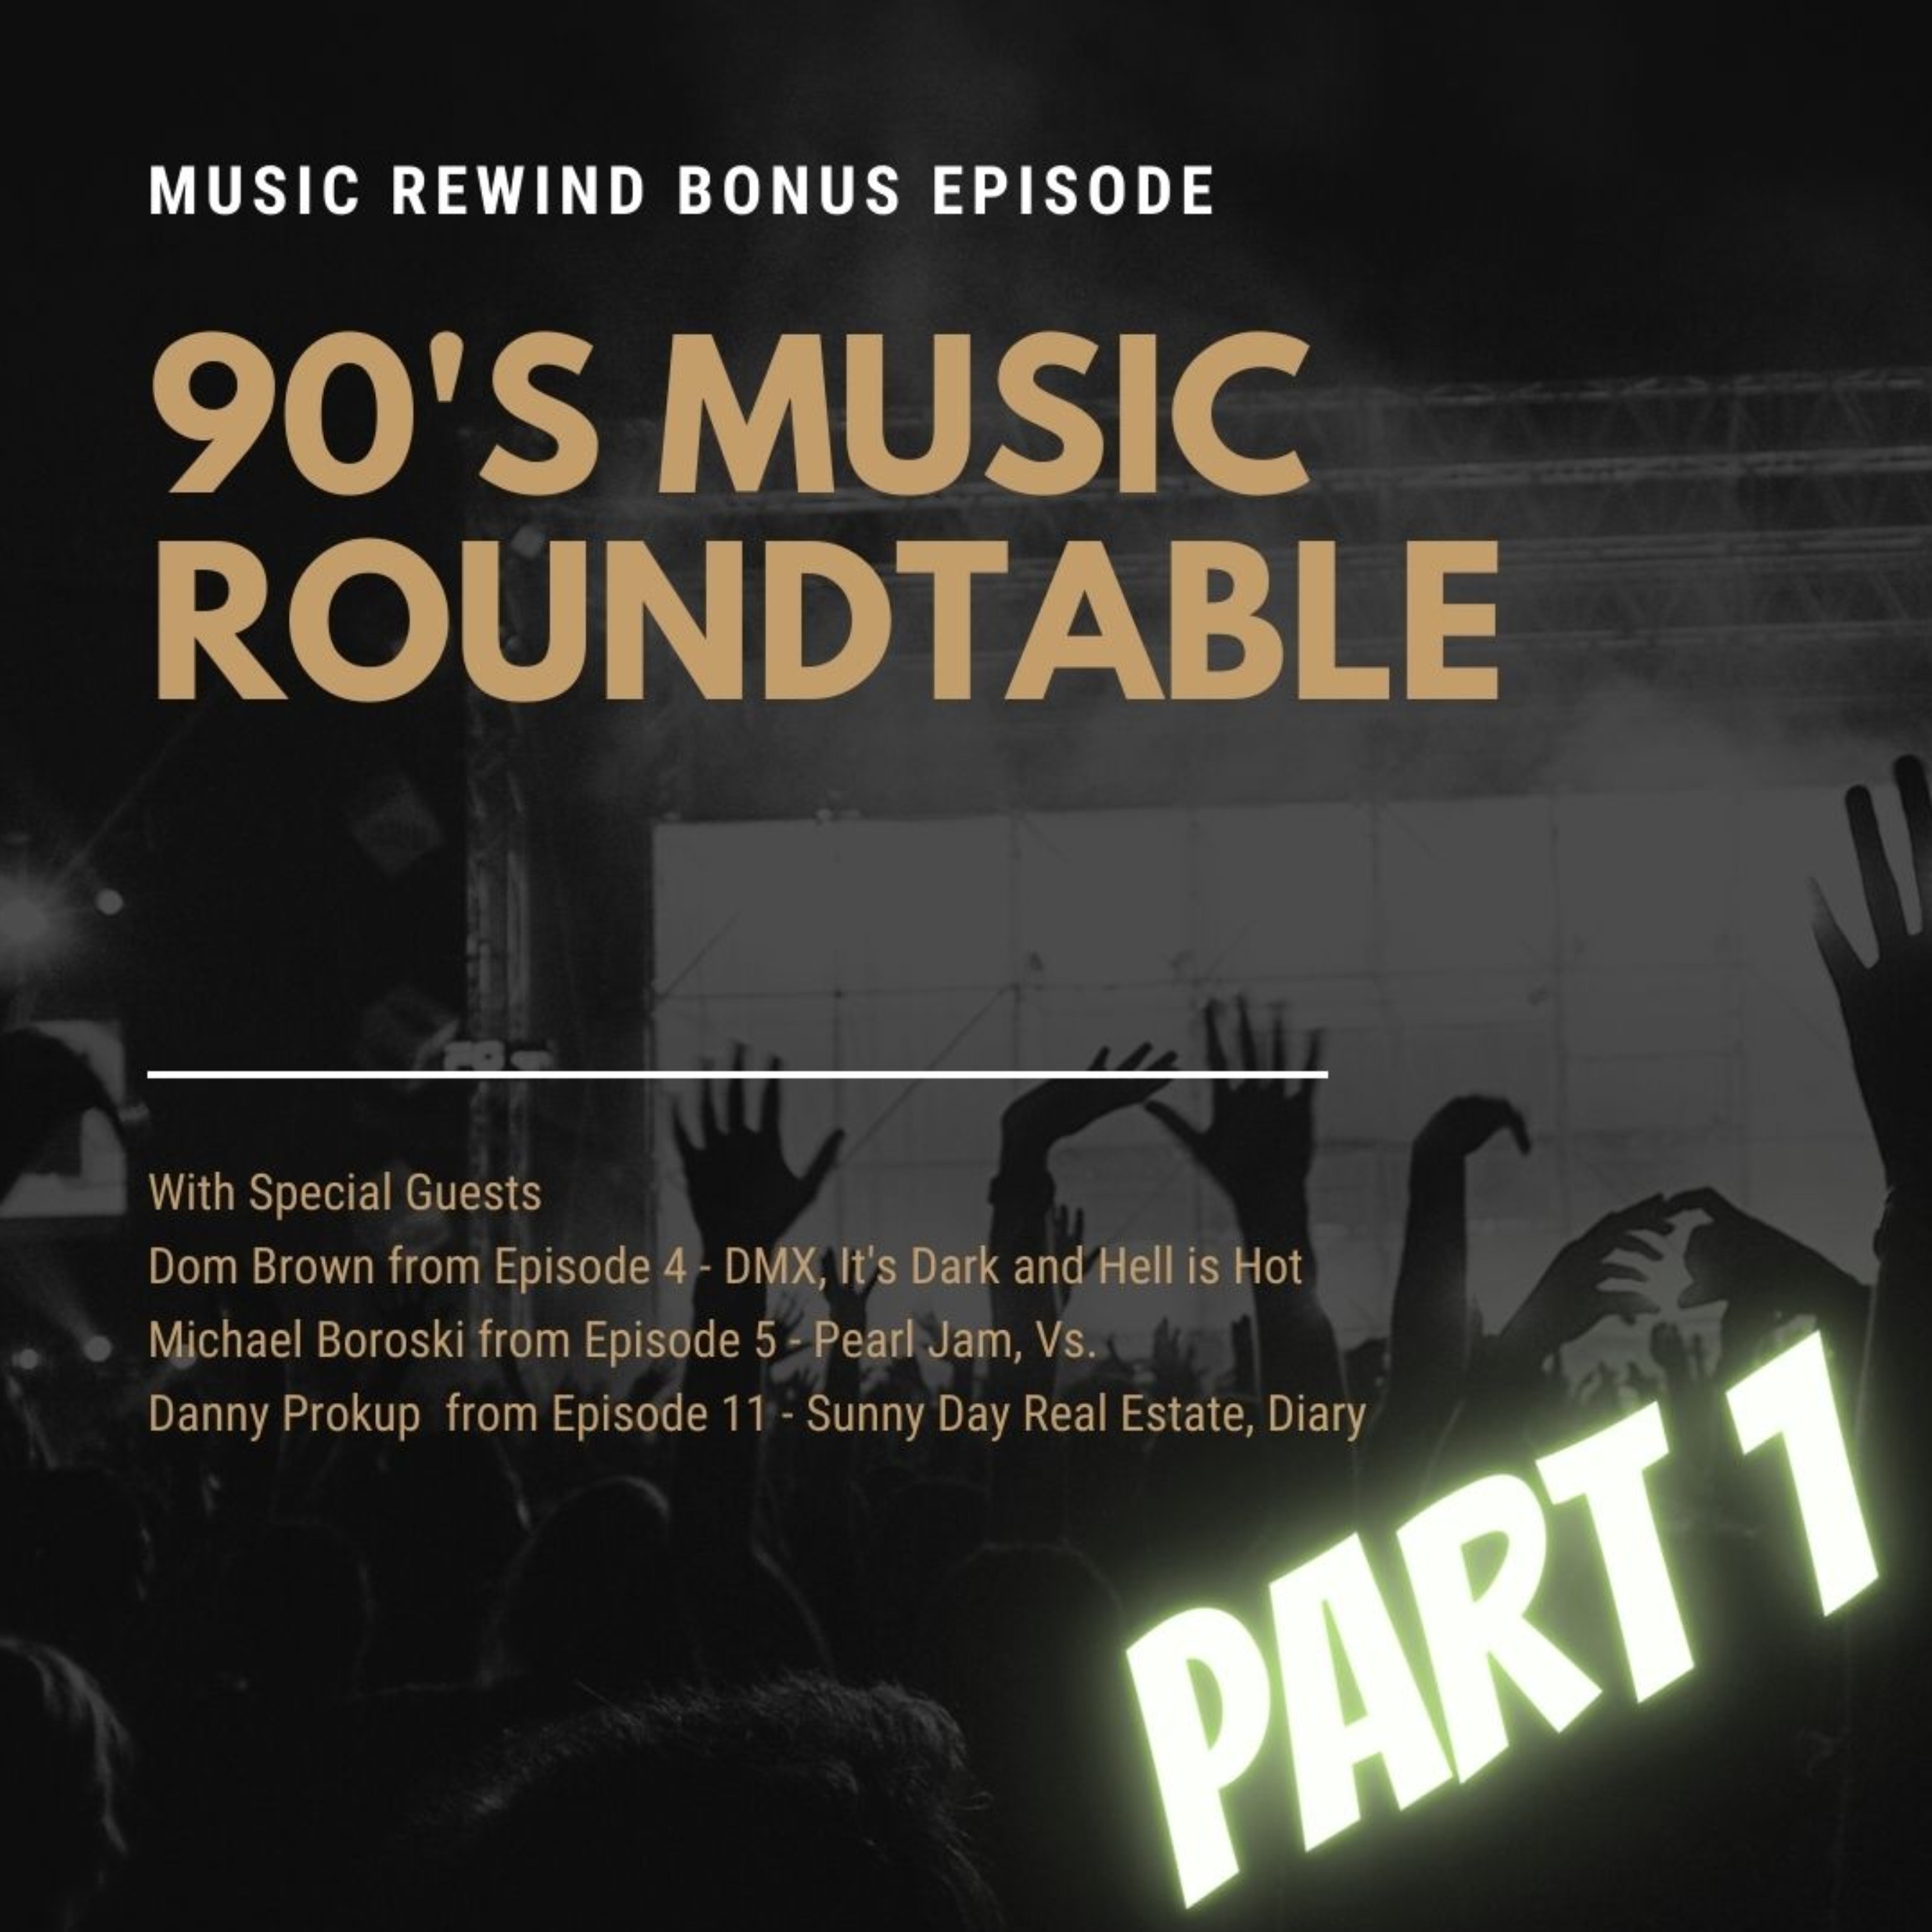 BONUS: 90s Music Roundtable - Part 1